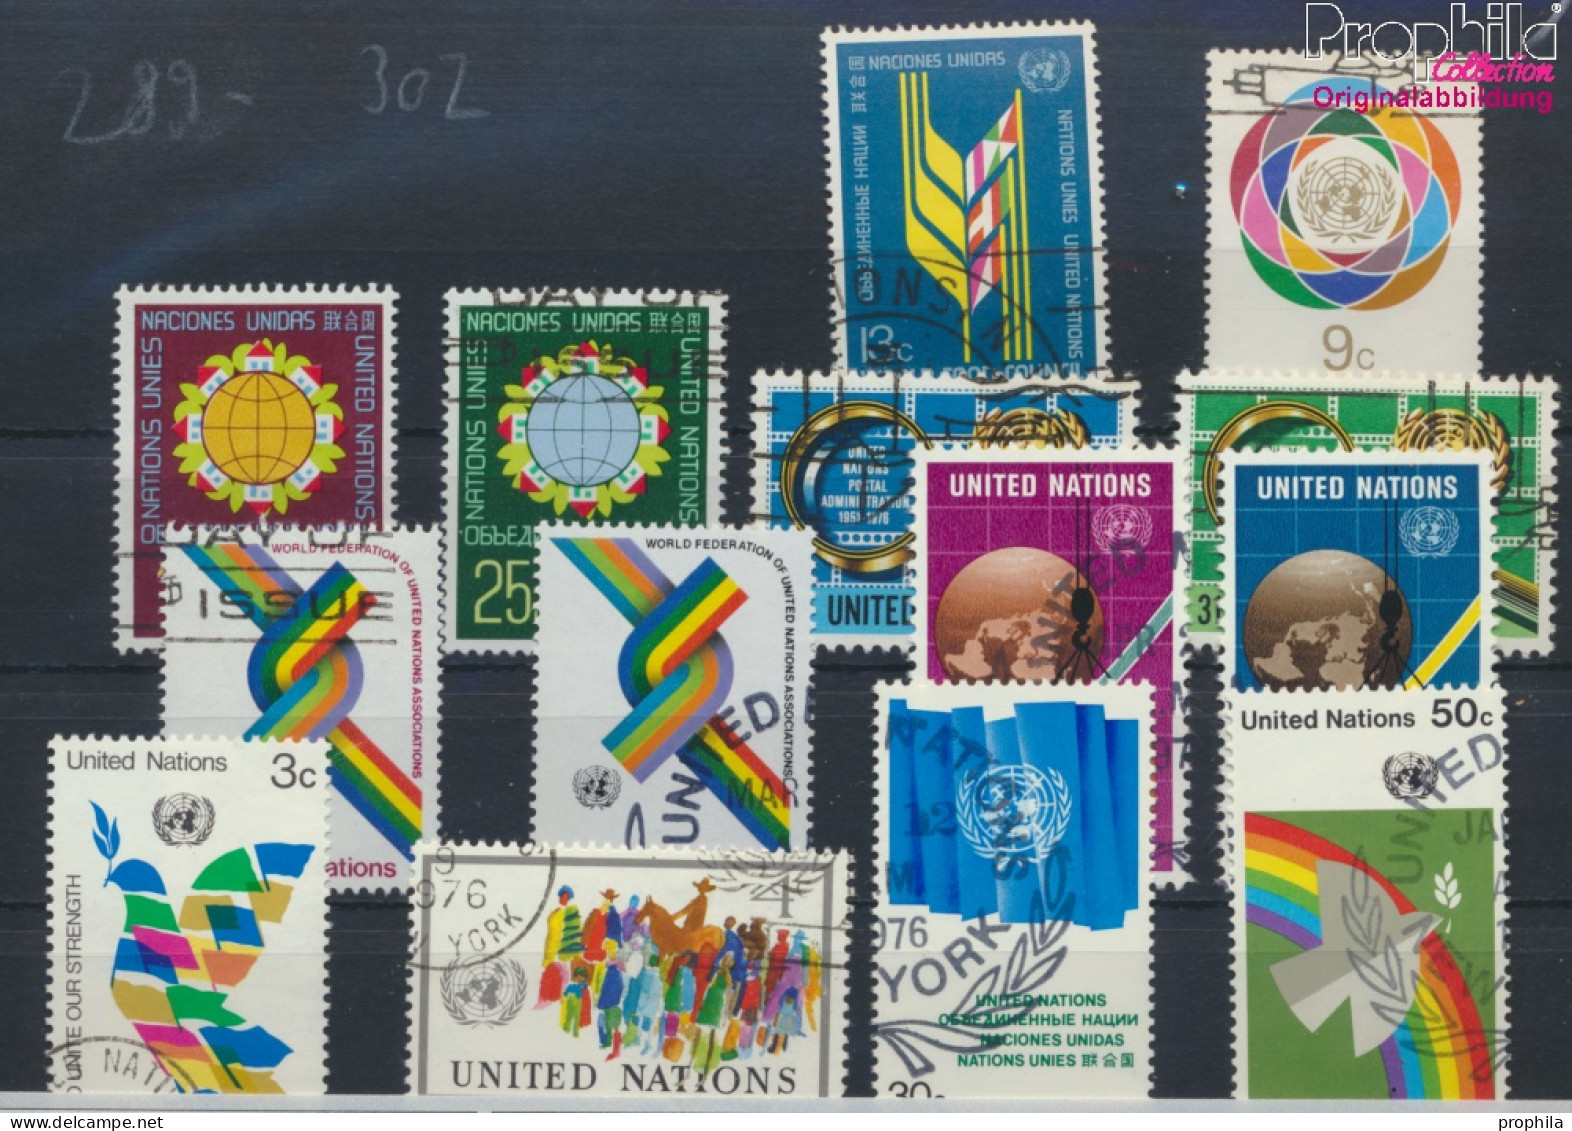 UNO - New York 289-302 (kompl.Ausg.) Jahrgang 1976 Komplett Gestempelt 1976 WFC, Postverwaltung U.a. (10063554 - Used Stamps